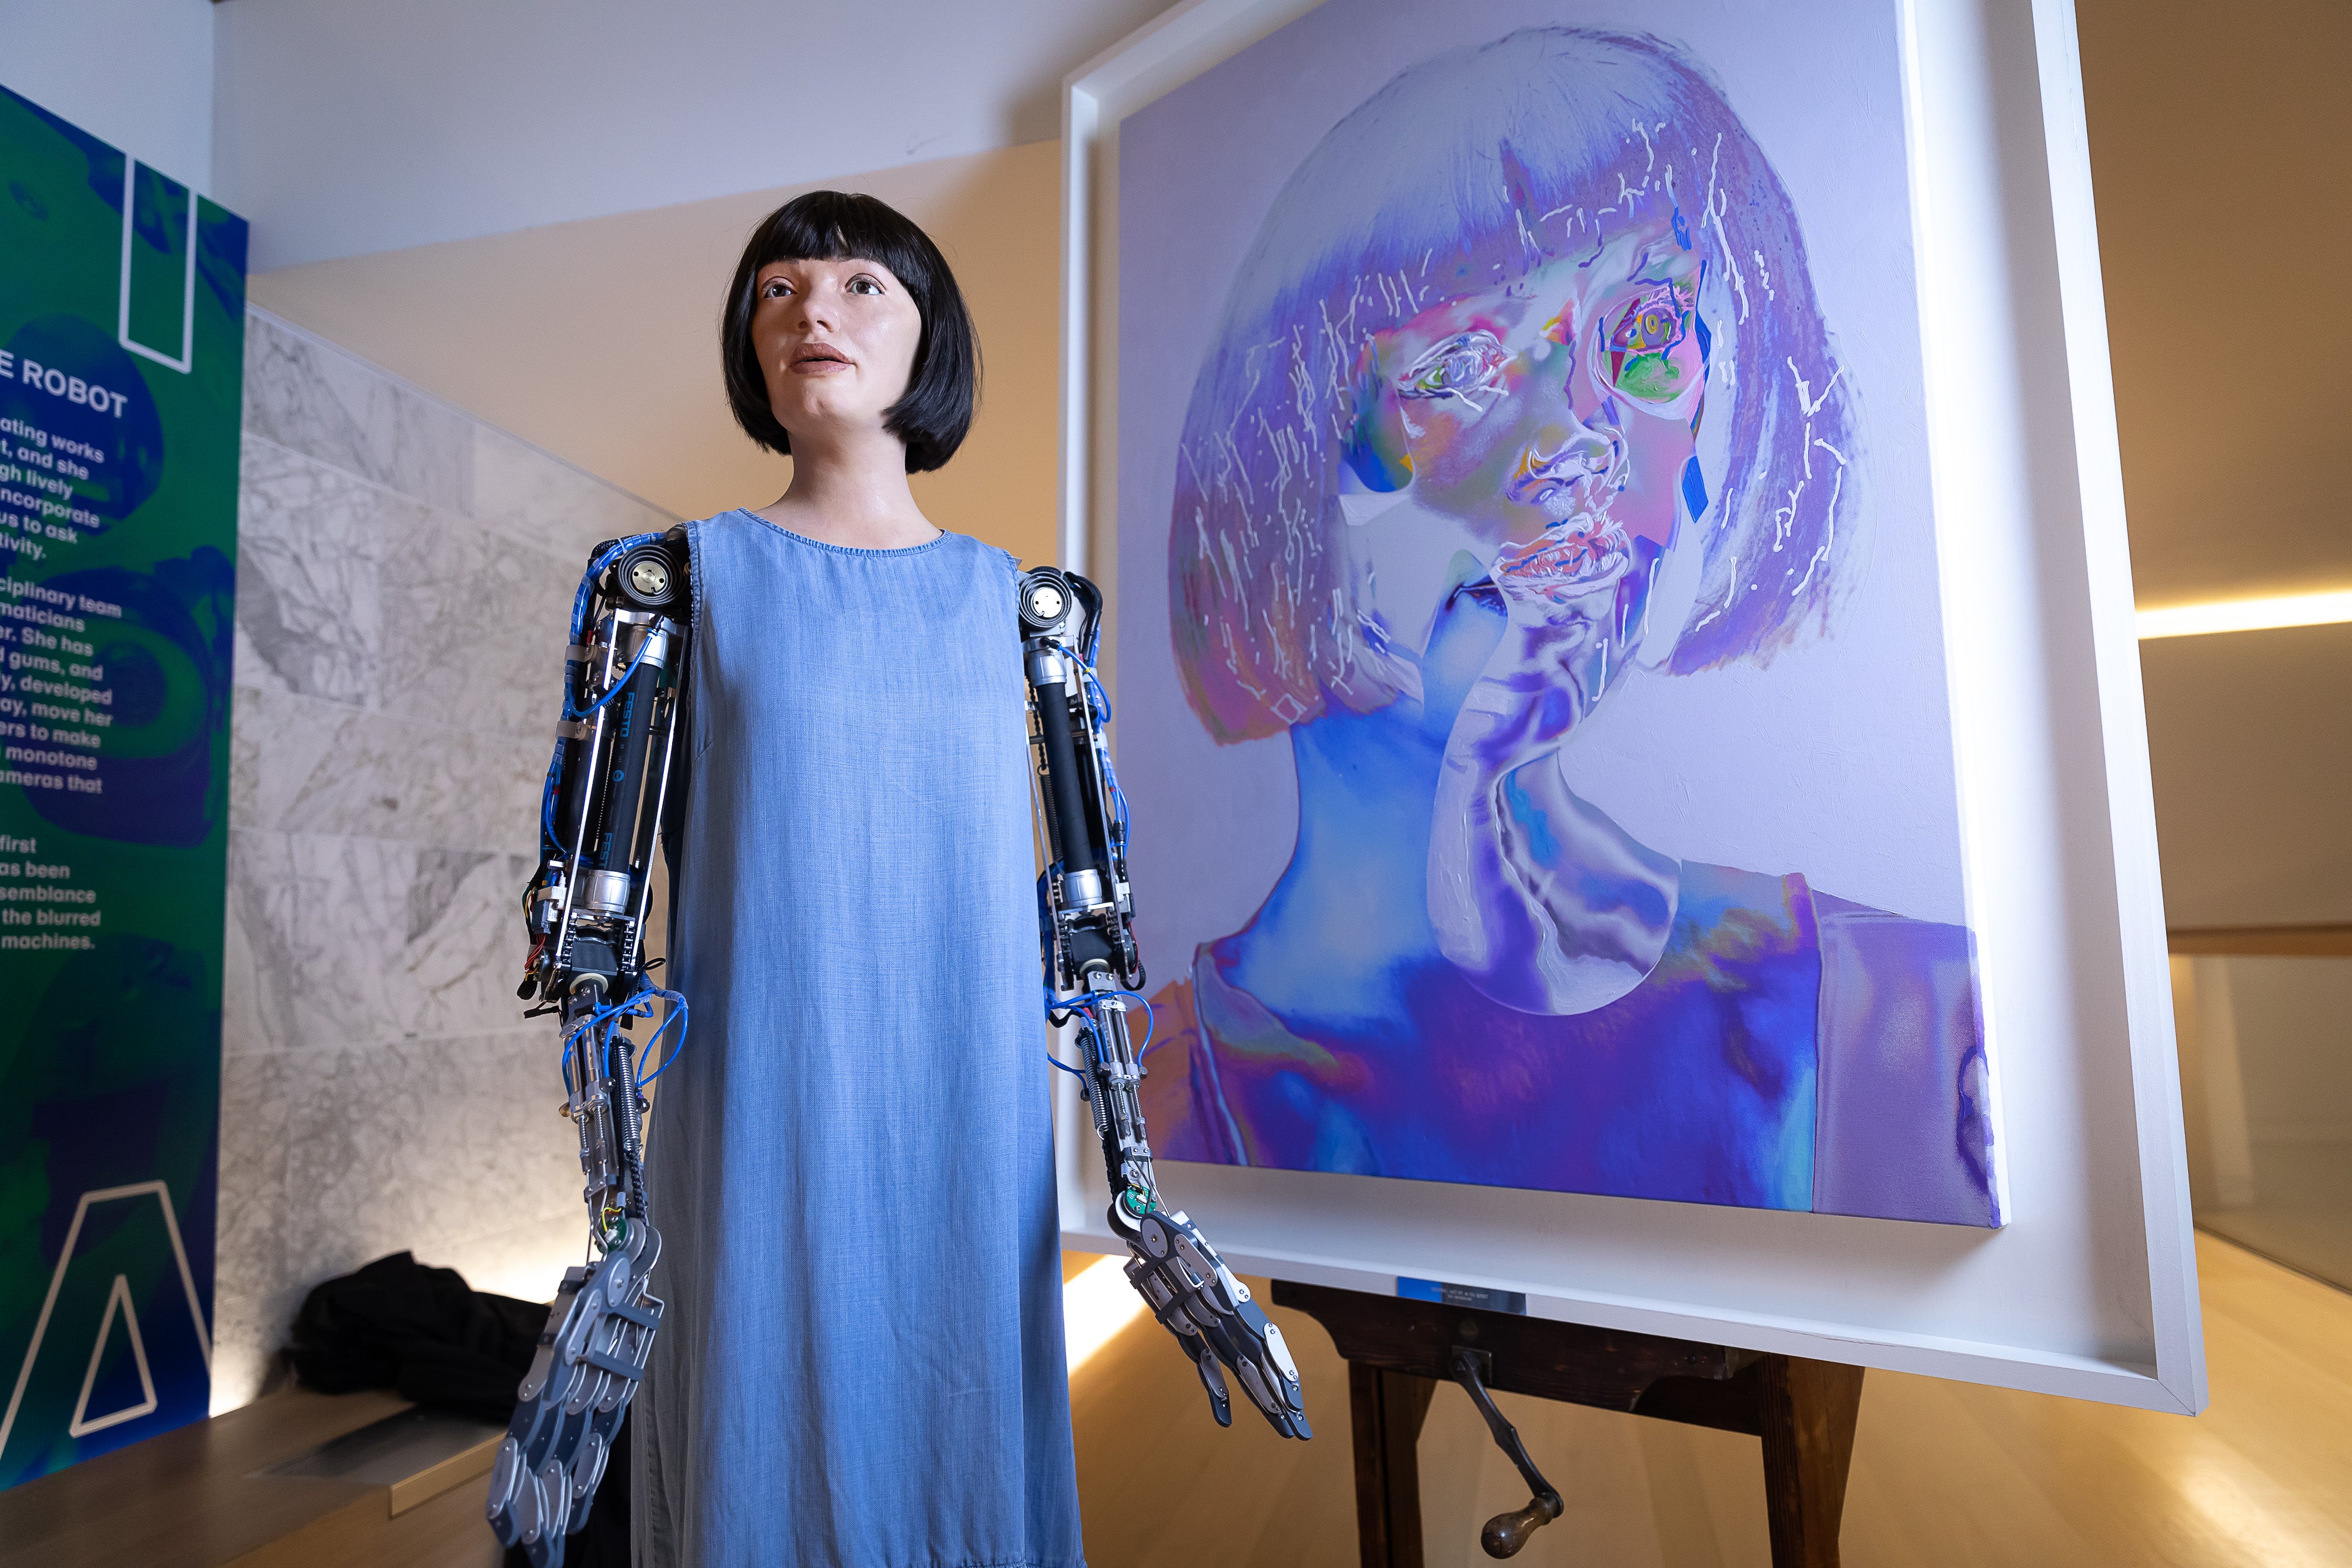 Ai-Da is considered the world’s first AI powered artist